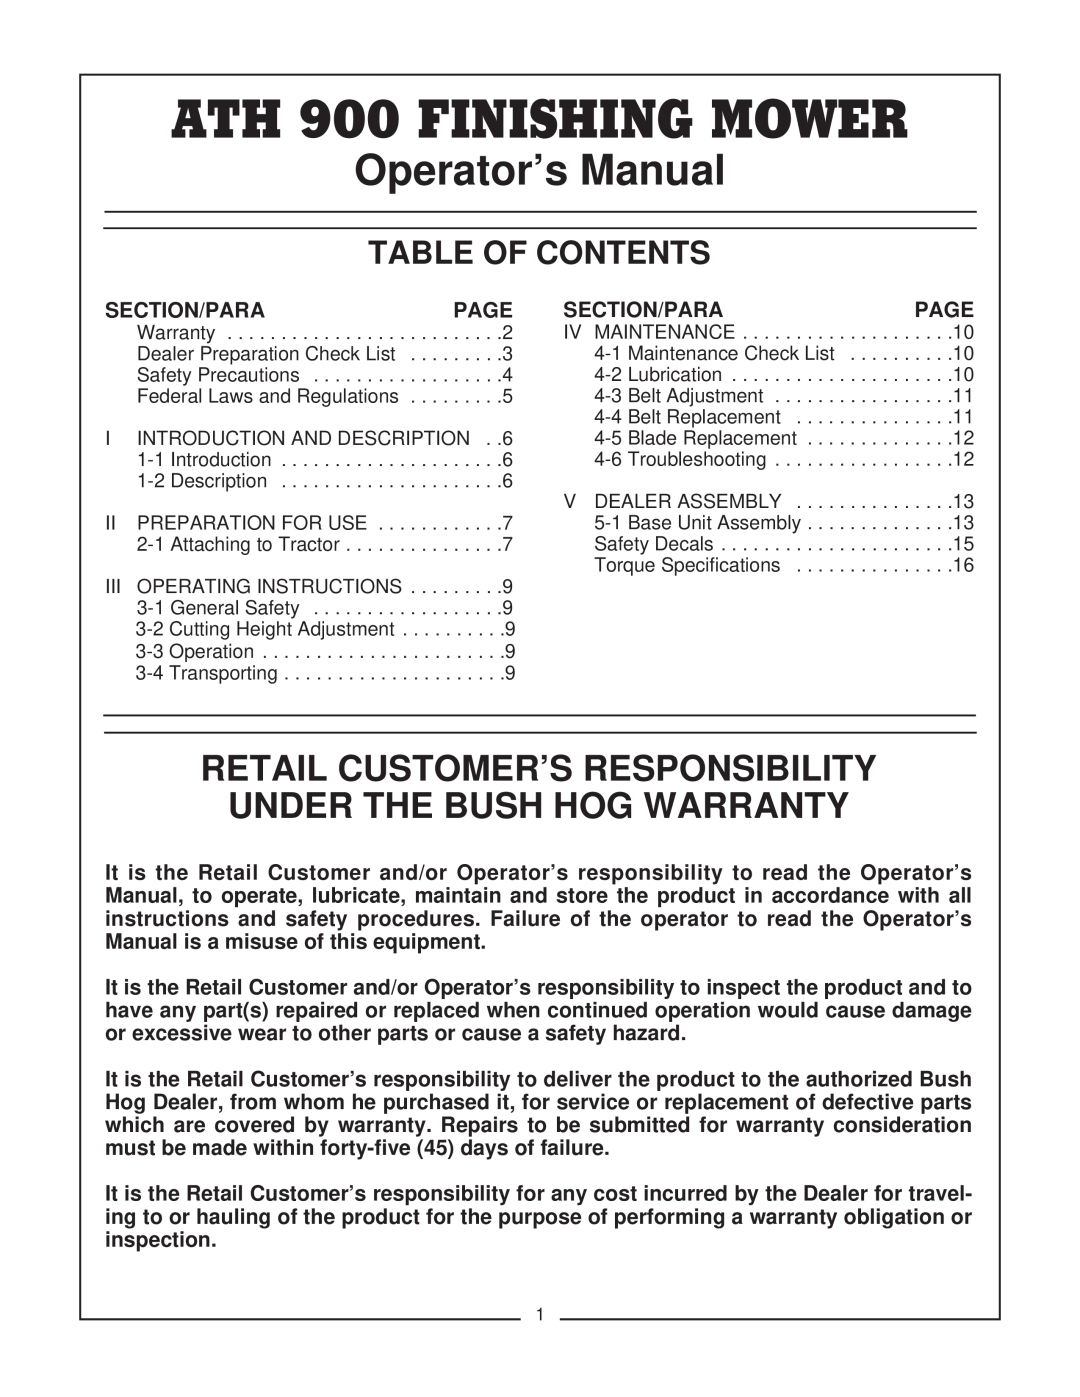 Bush Hog manual Table Of Contents, ATH 900Operator’sFINISHINGManualMOWER 